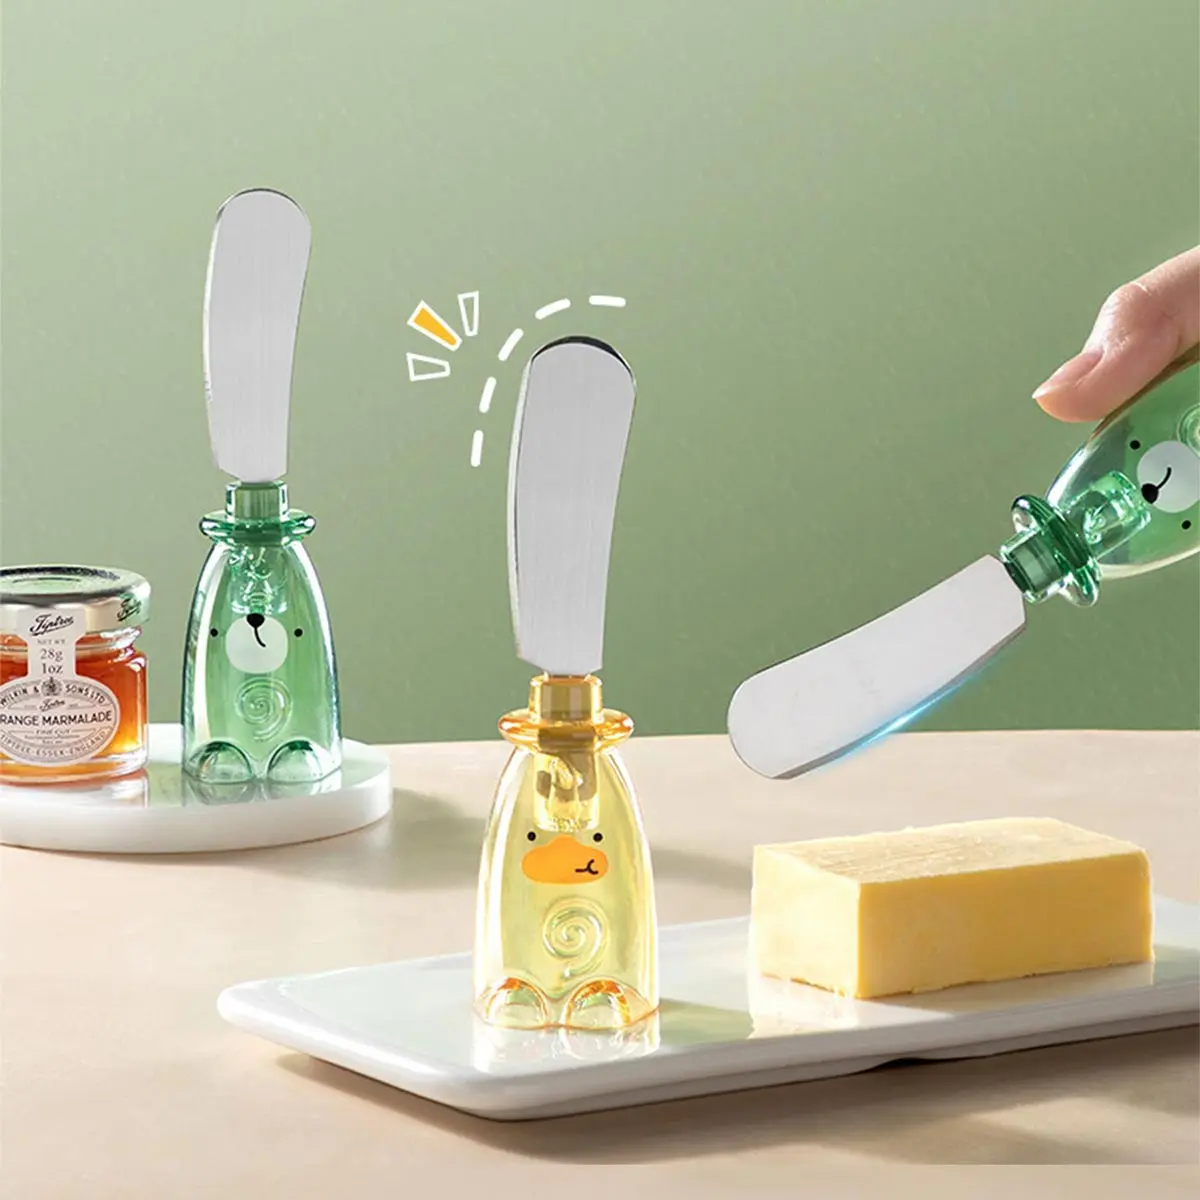 https://ae01.alicdn.com/kf/S5b5474f980de4045a2dca272ddfbbcf7B/WORTHBUY-Cute-Stainless-Steel-Butter-Knife-Cheese-Cutter-Dessert-Jam-Spreading-Knife-Cheese-Slicer-Kitchen-Tools.jpg